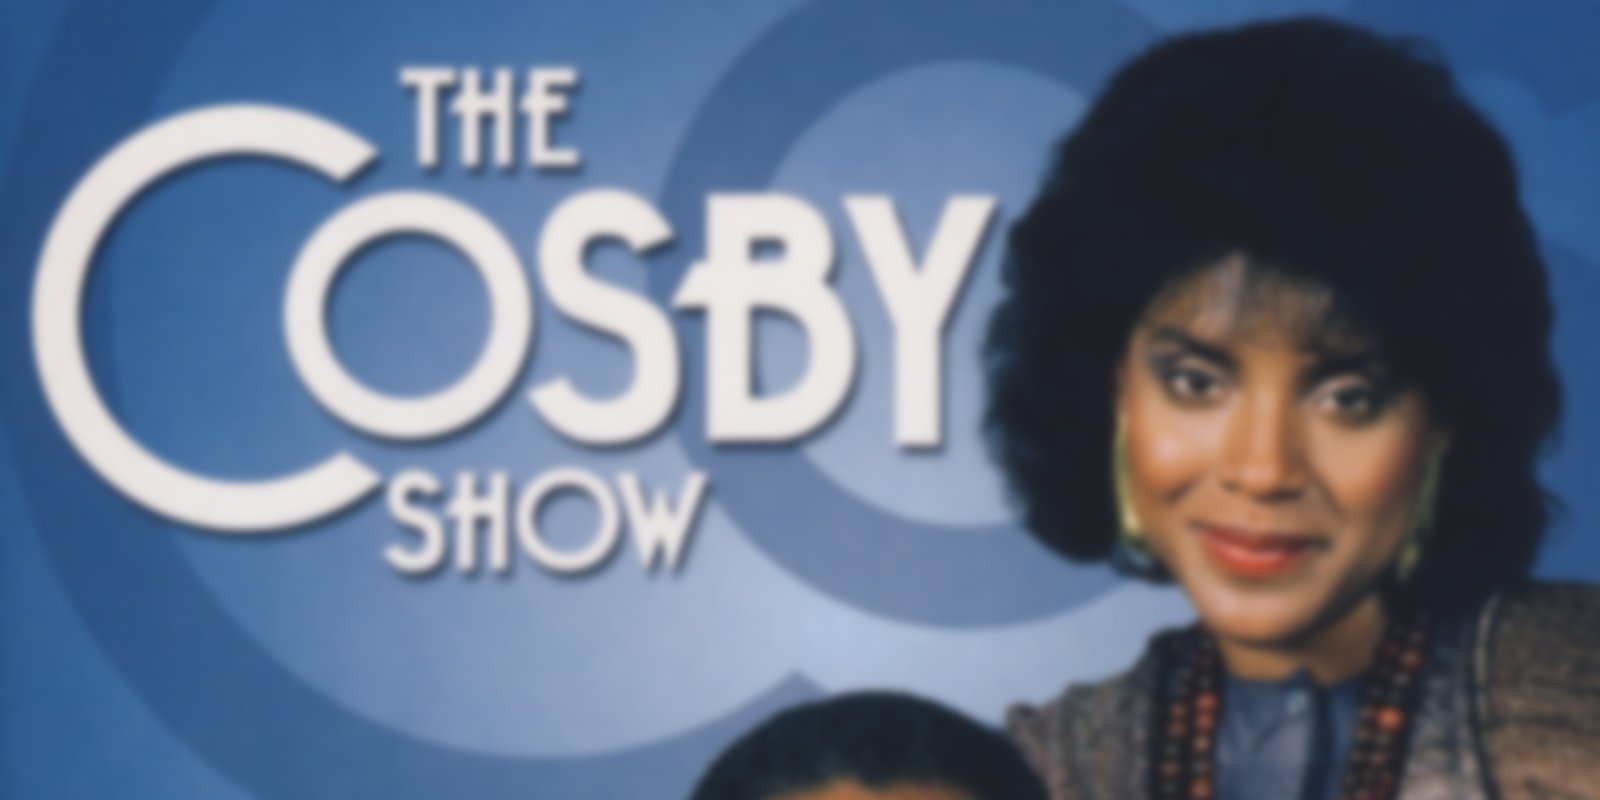 Die Bill Cosby Show - Staffel 2